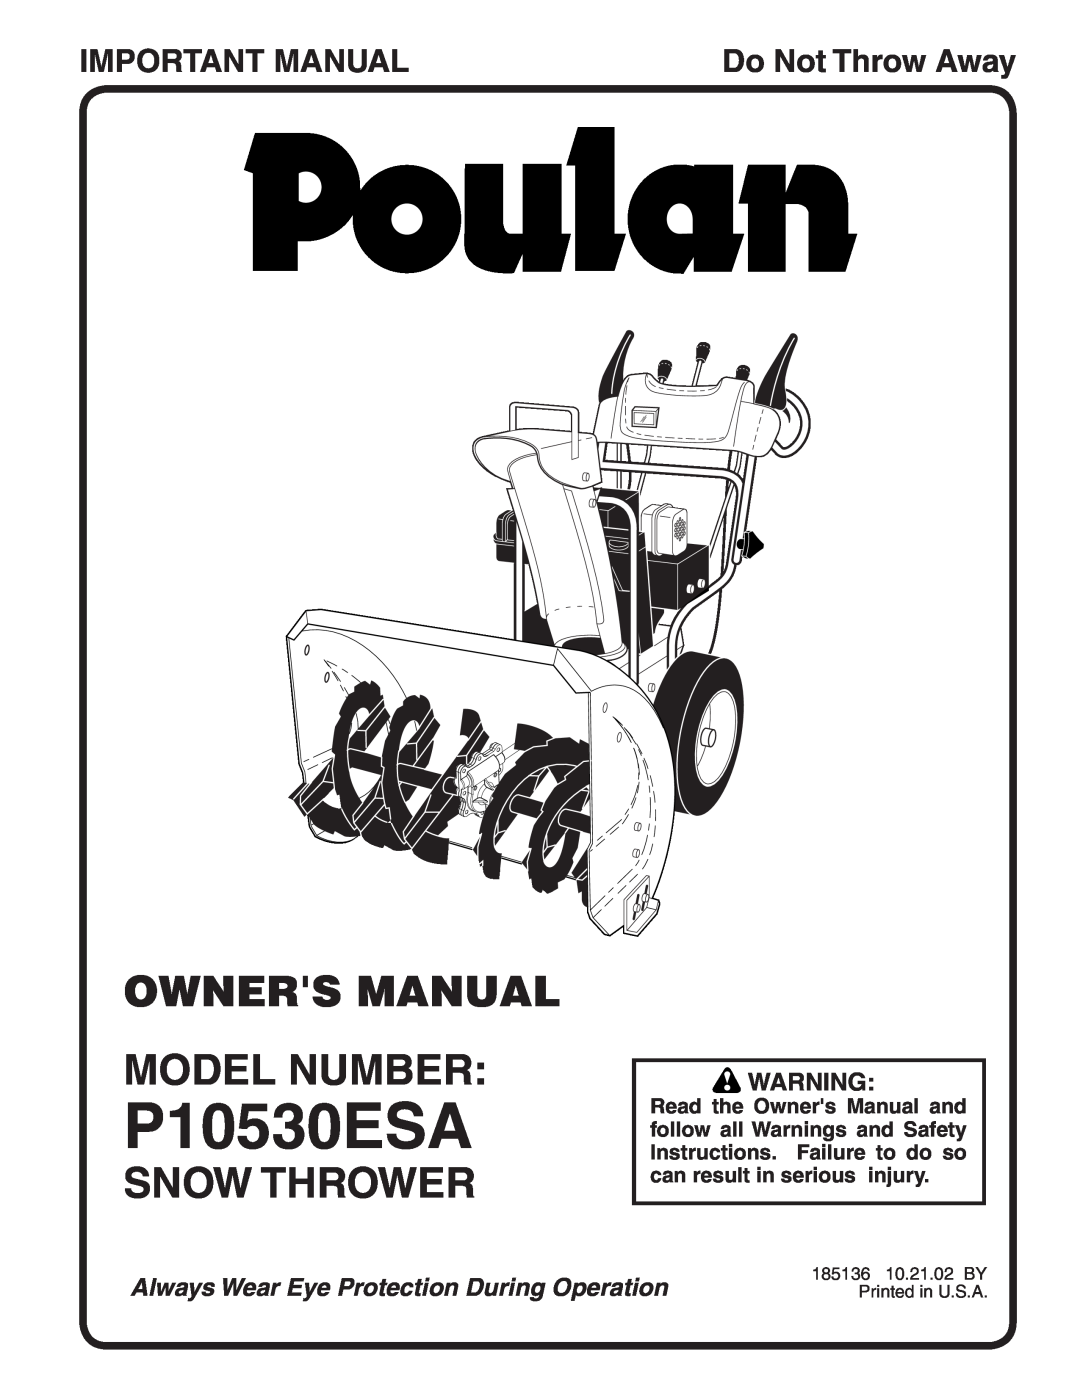 Poulan 185136 owner manual Snow Thrower, Important Manual, P10530ESA, Do Not Throw Away 